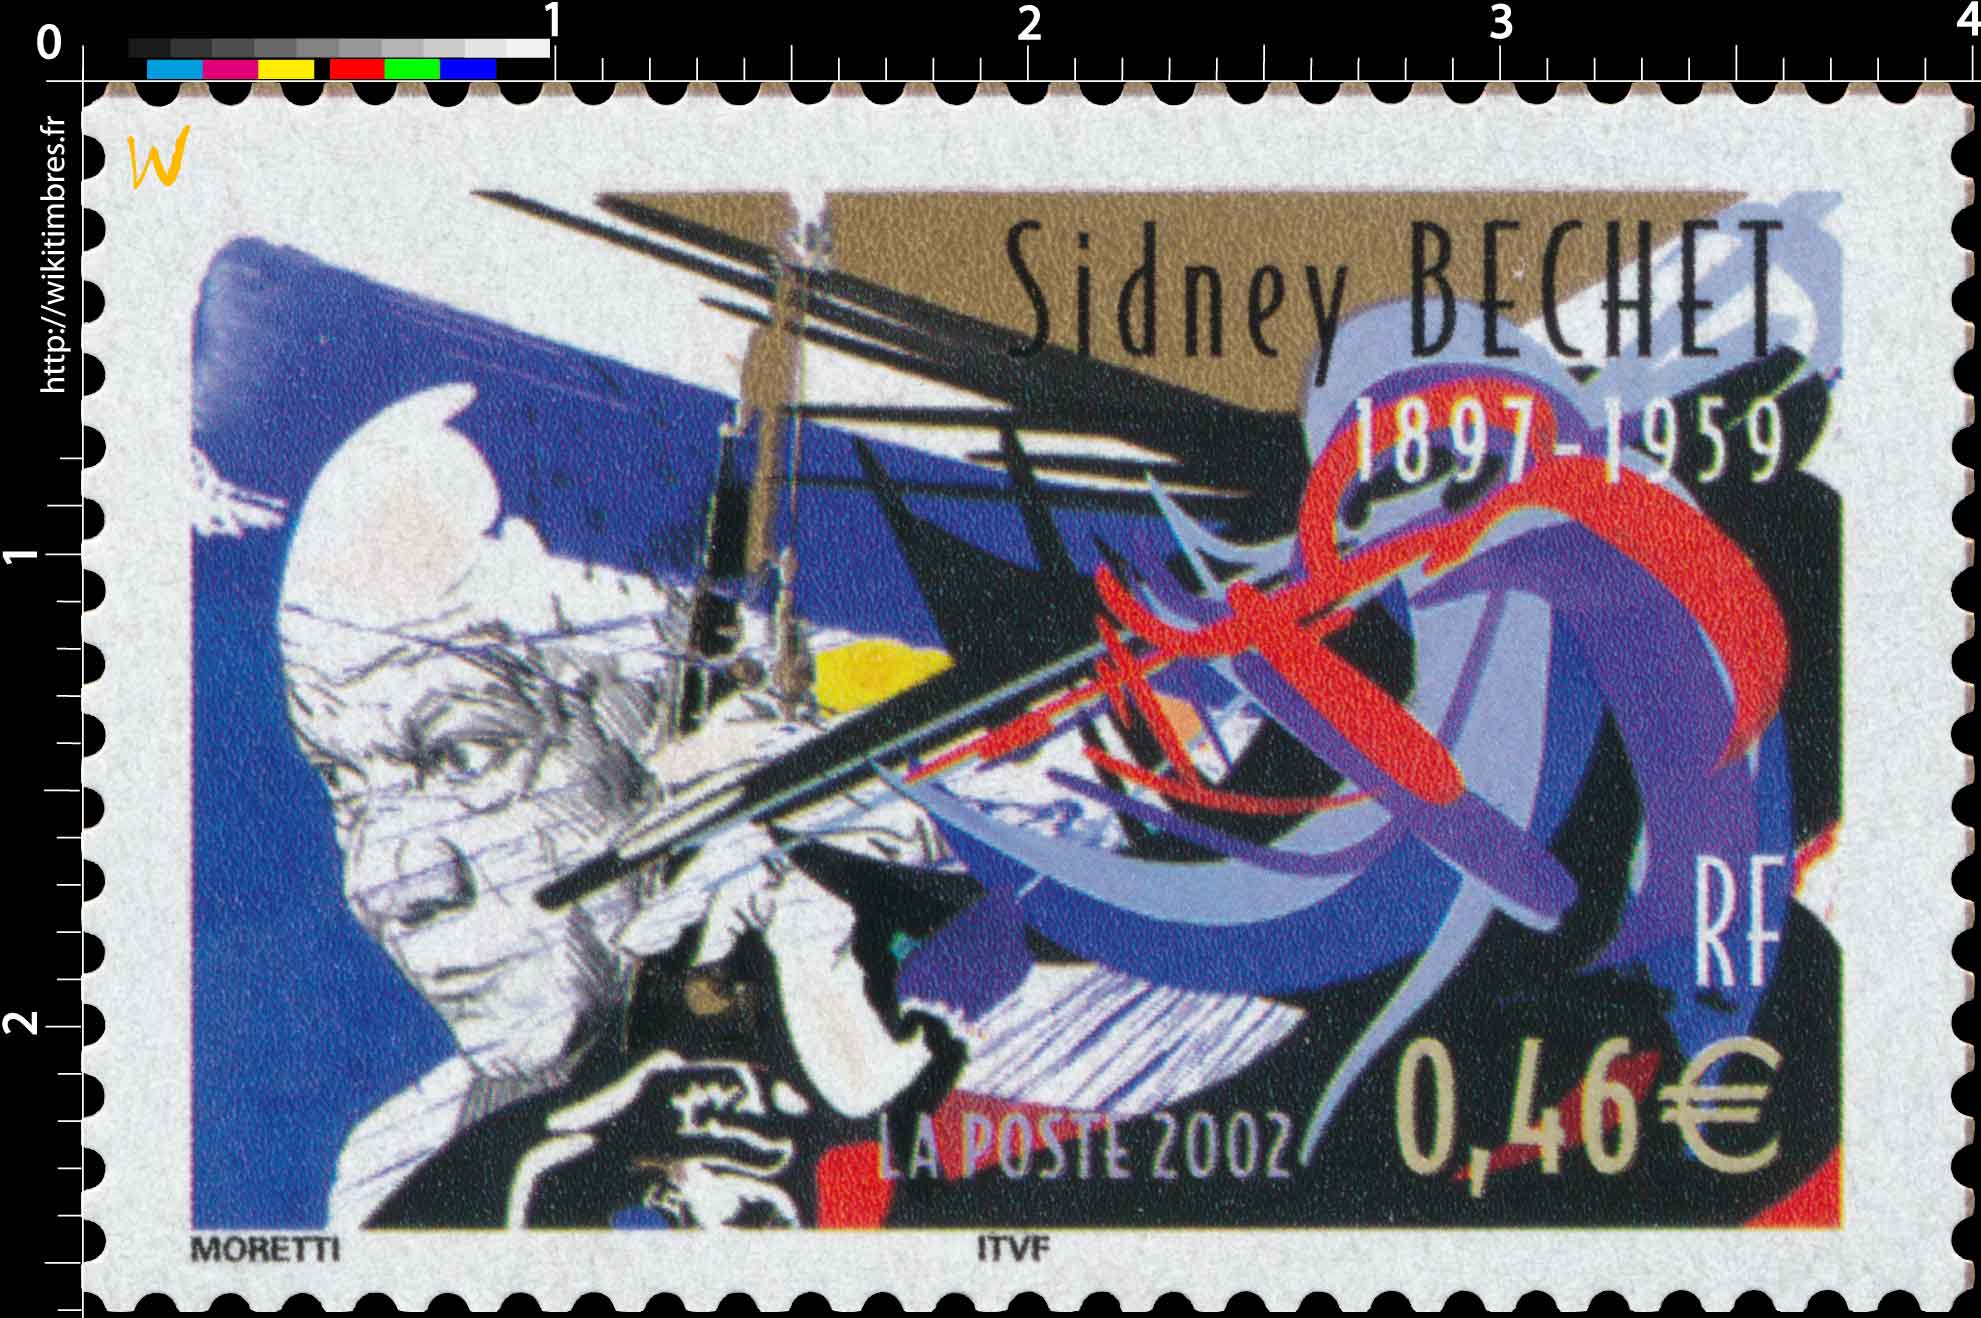 2002 Sidney BECHET 1897-1959